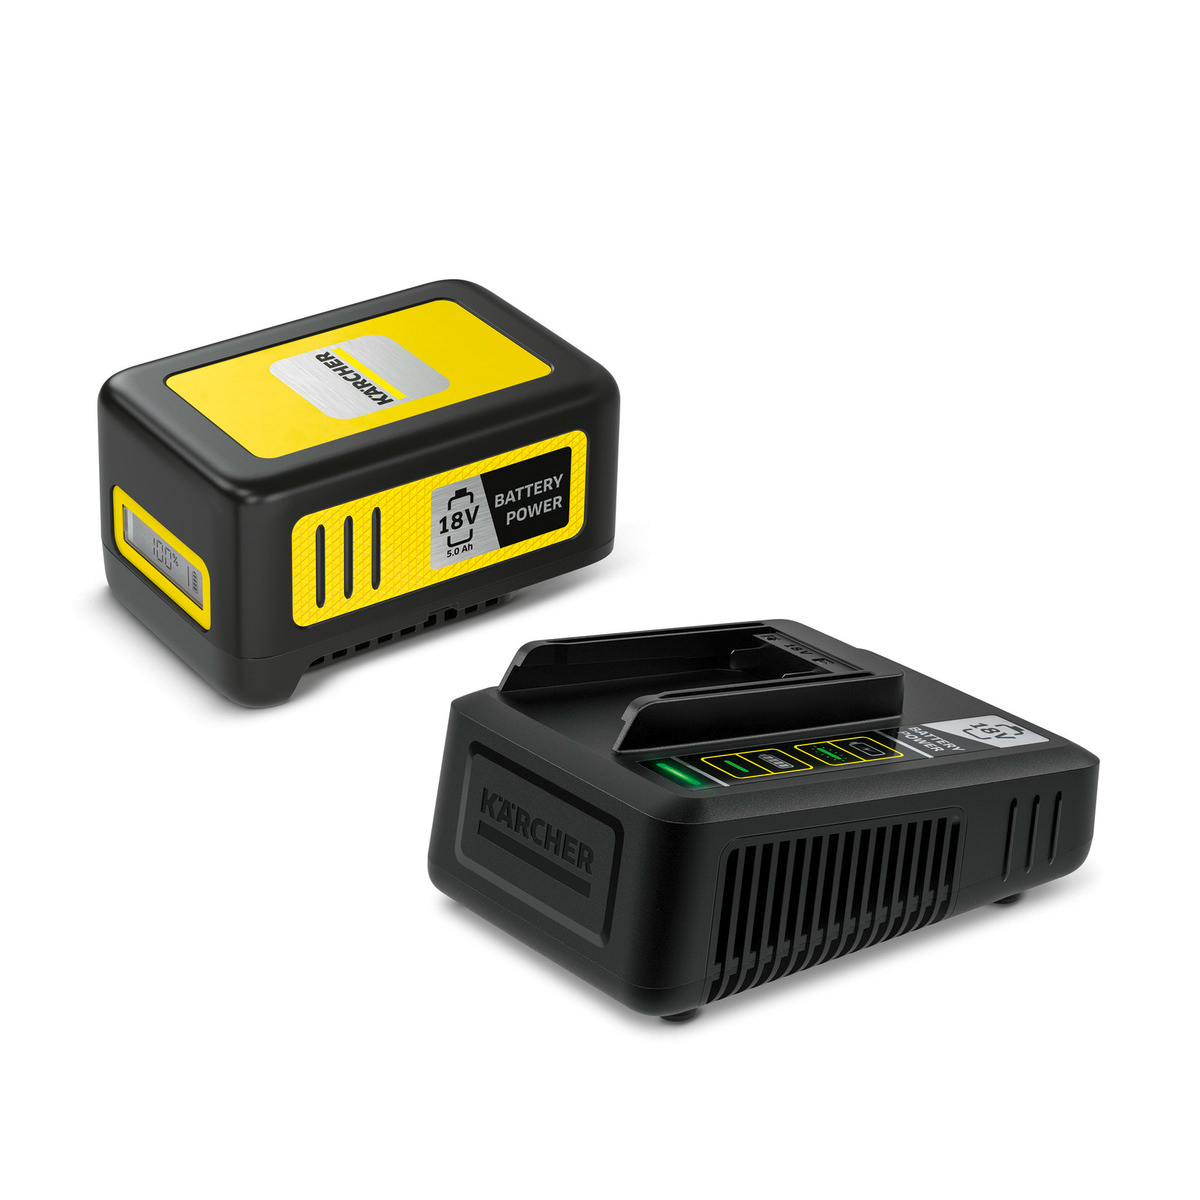 Démarreur kit Battery Power 18/50 *EU KÄRCHER - 2.445-063.0